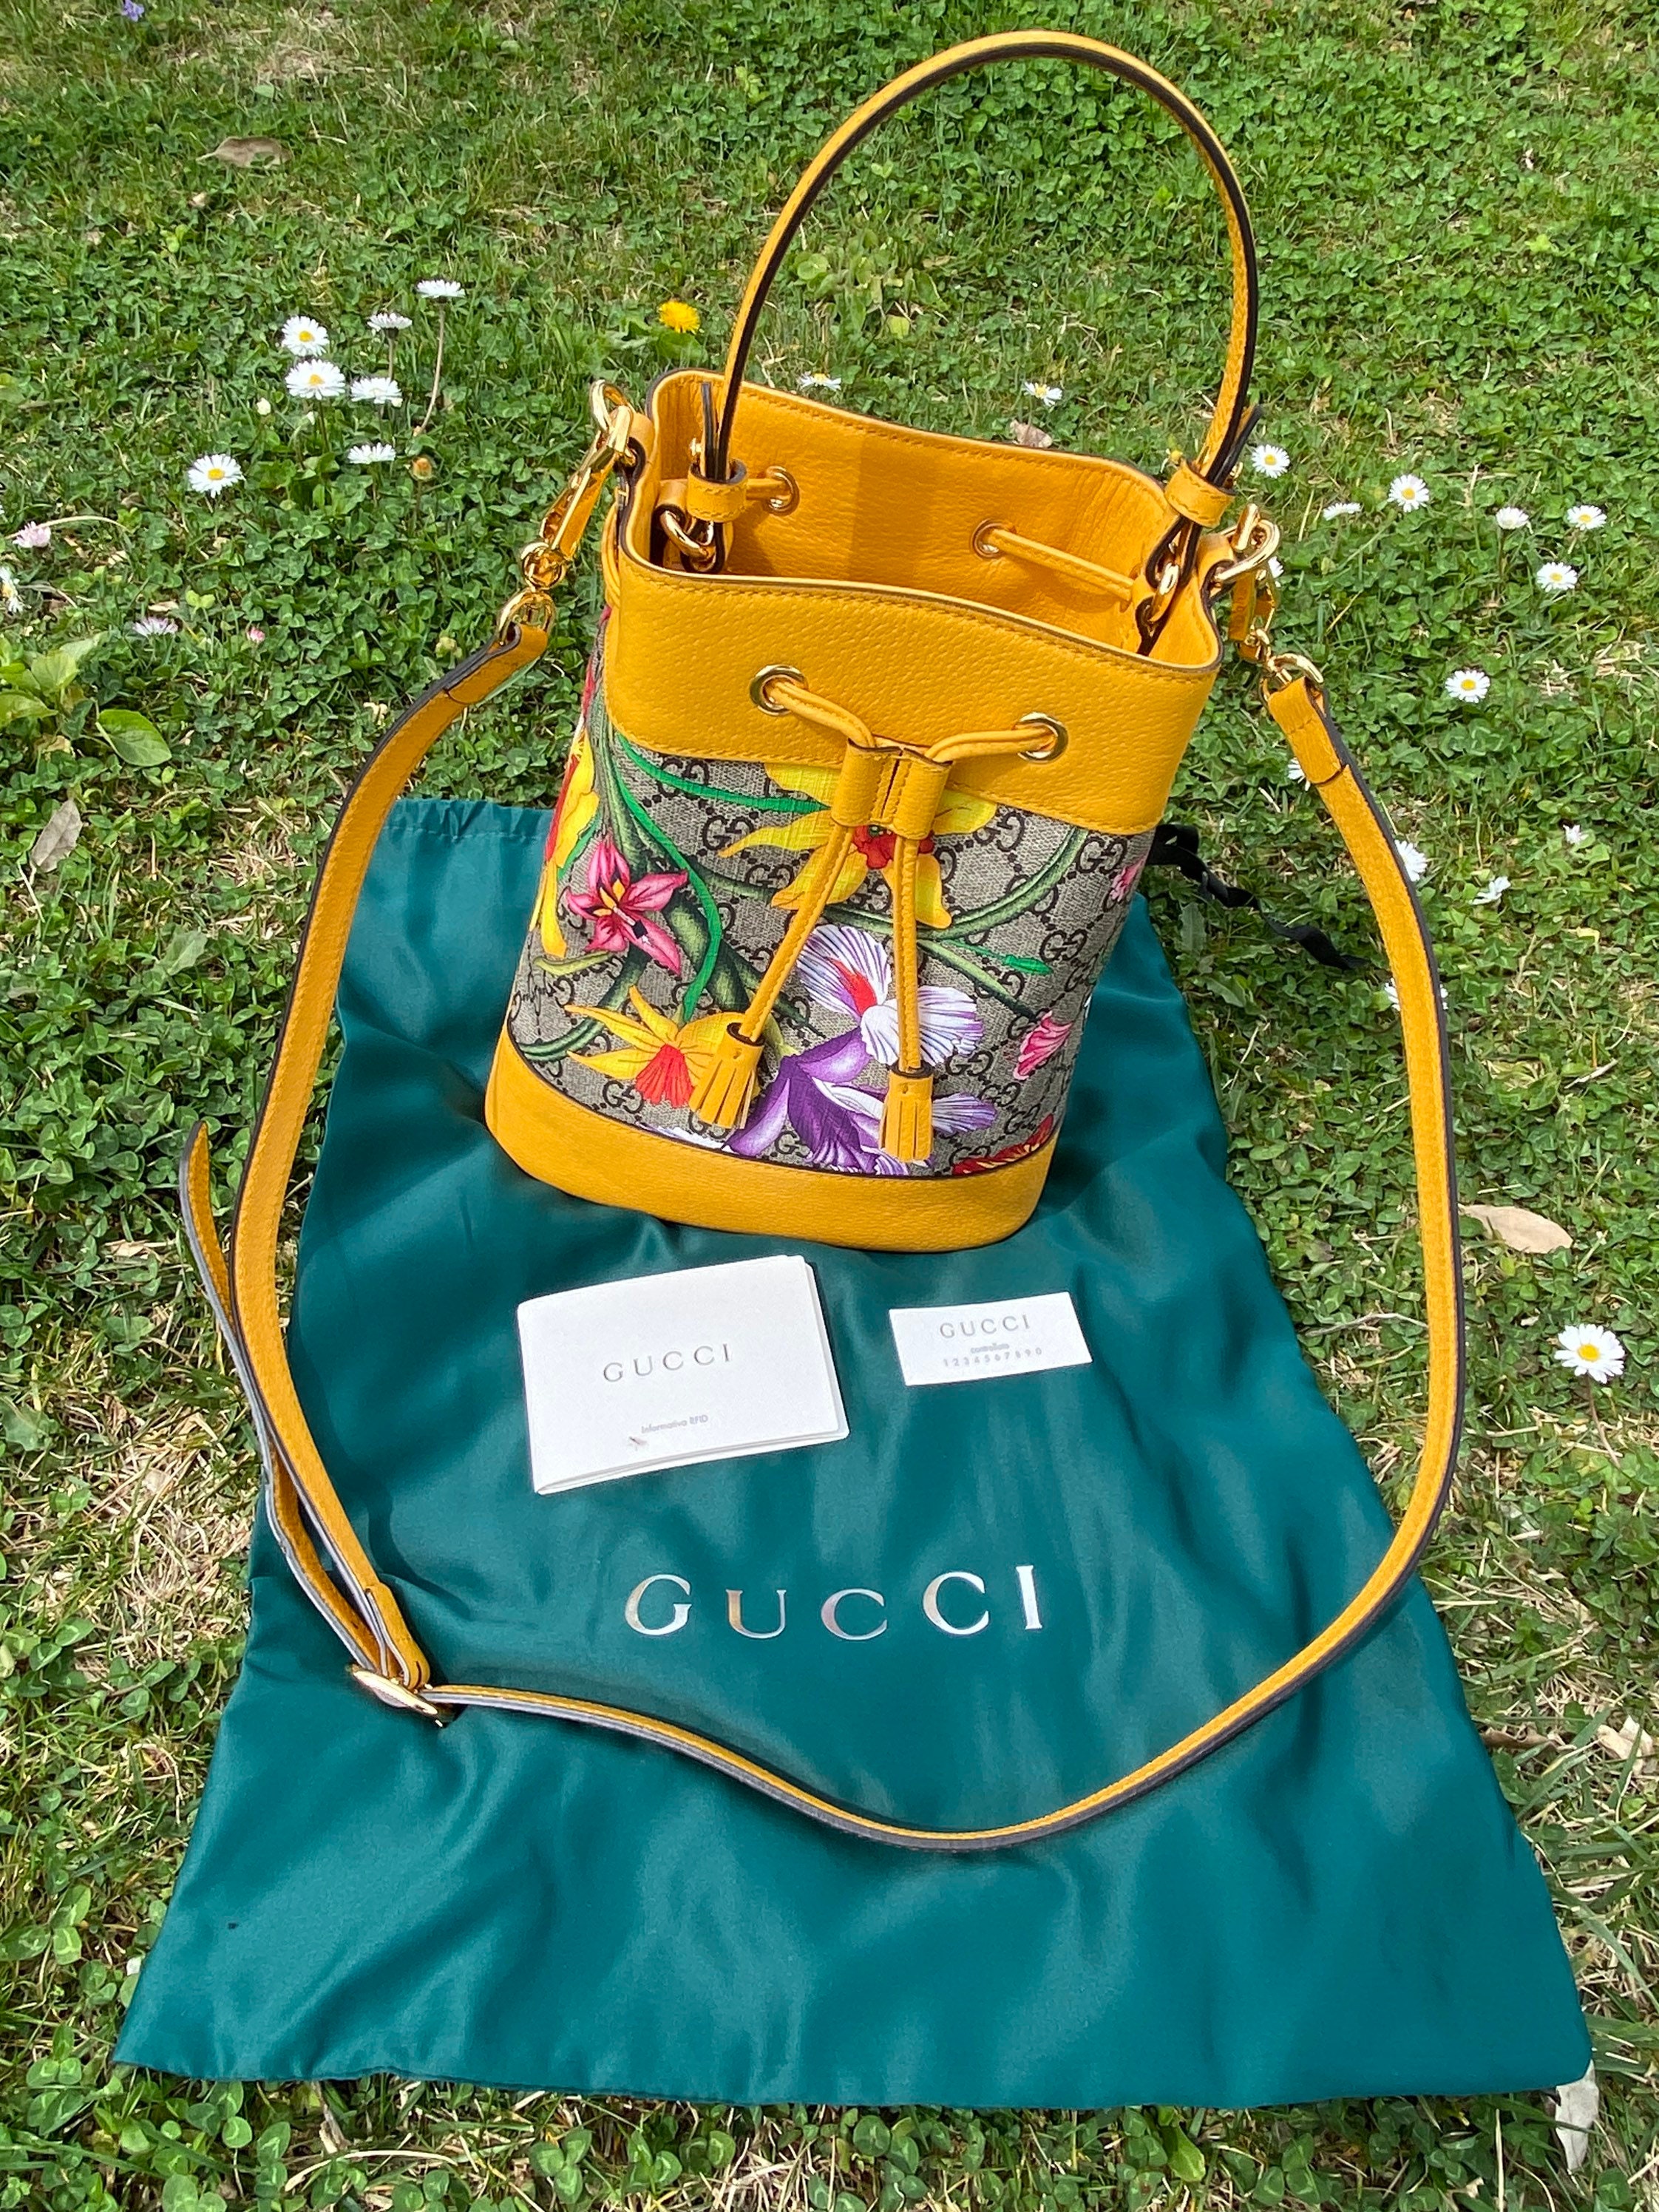 Gucci Floral Bag - Etsy